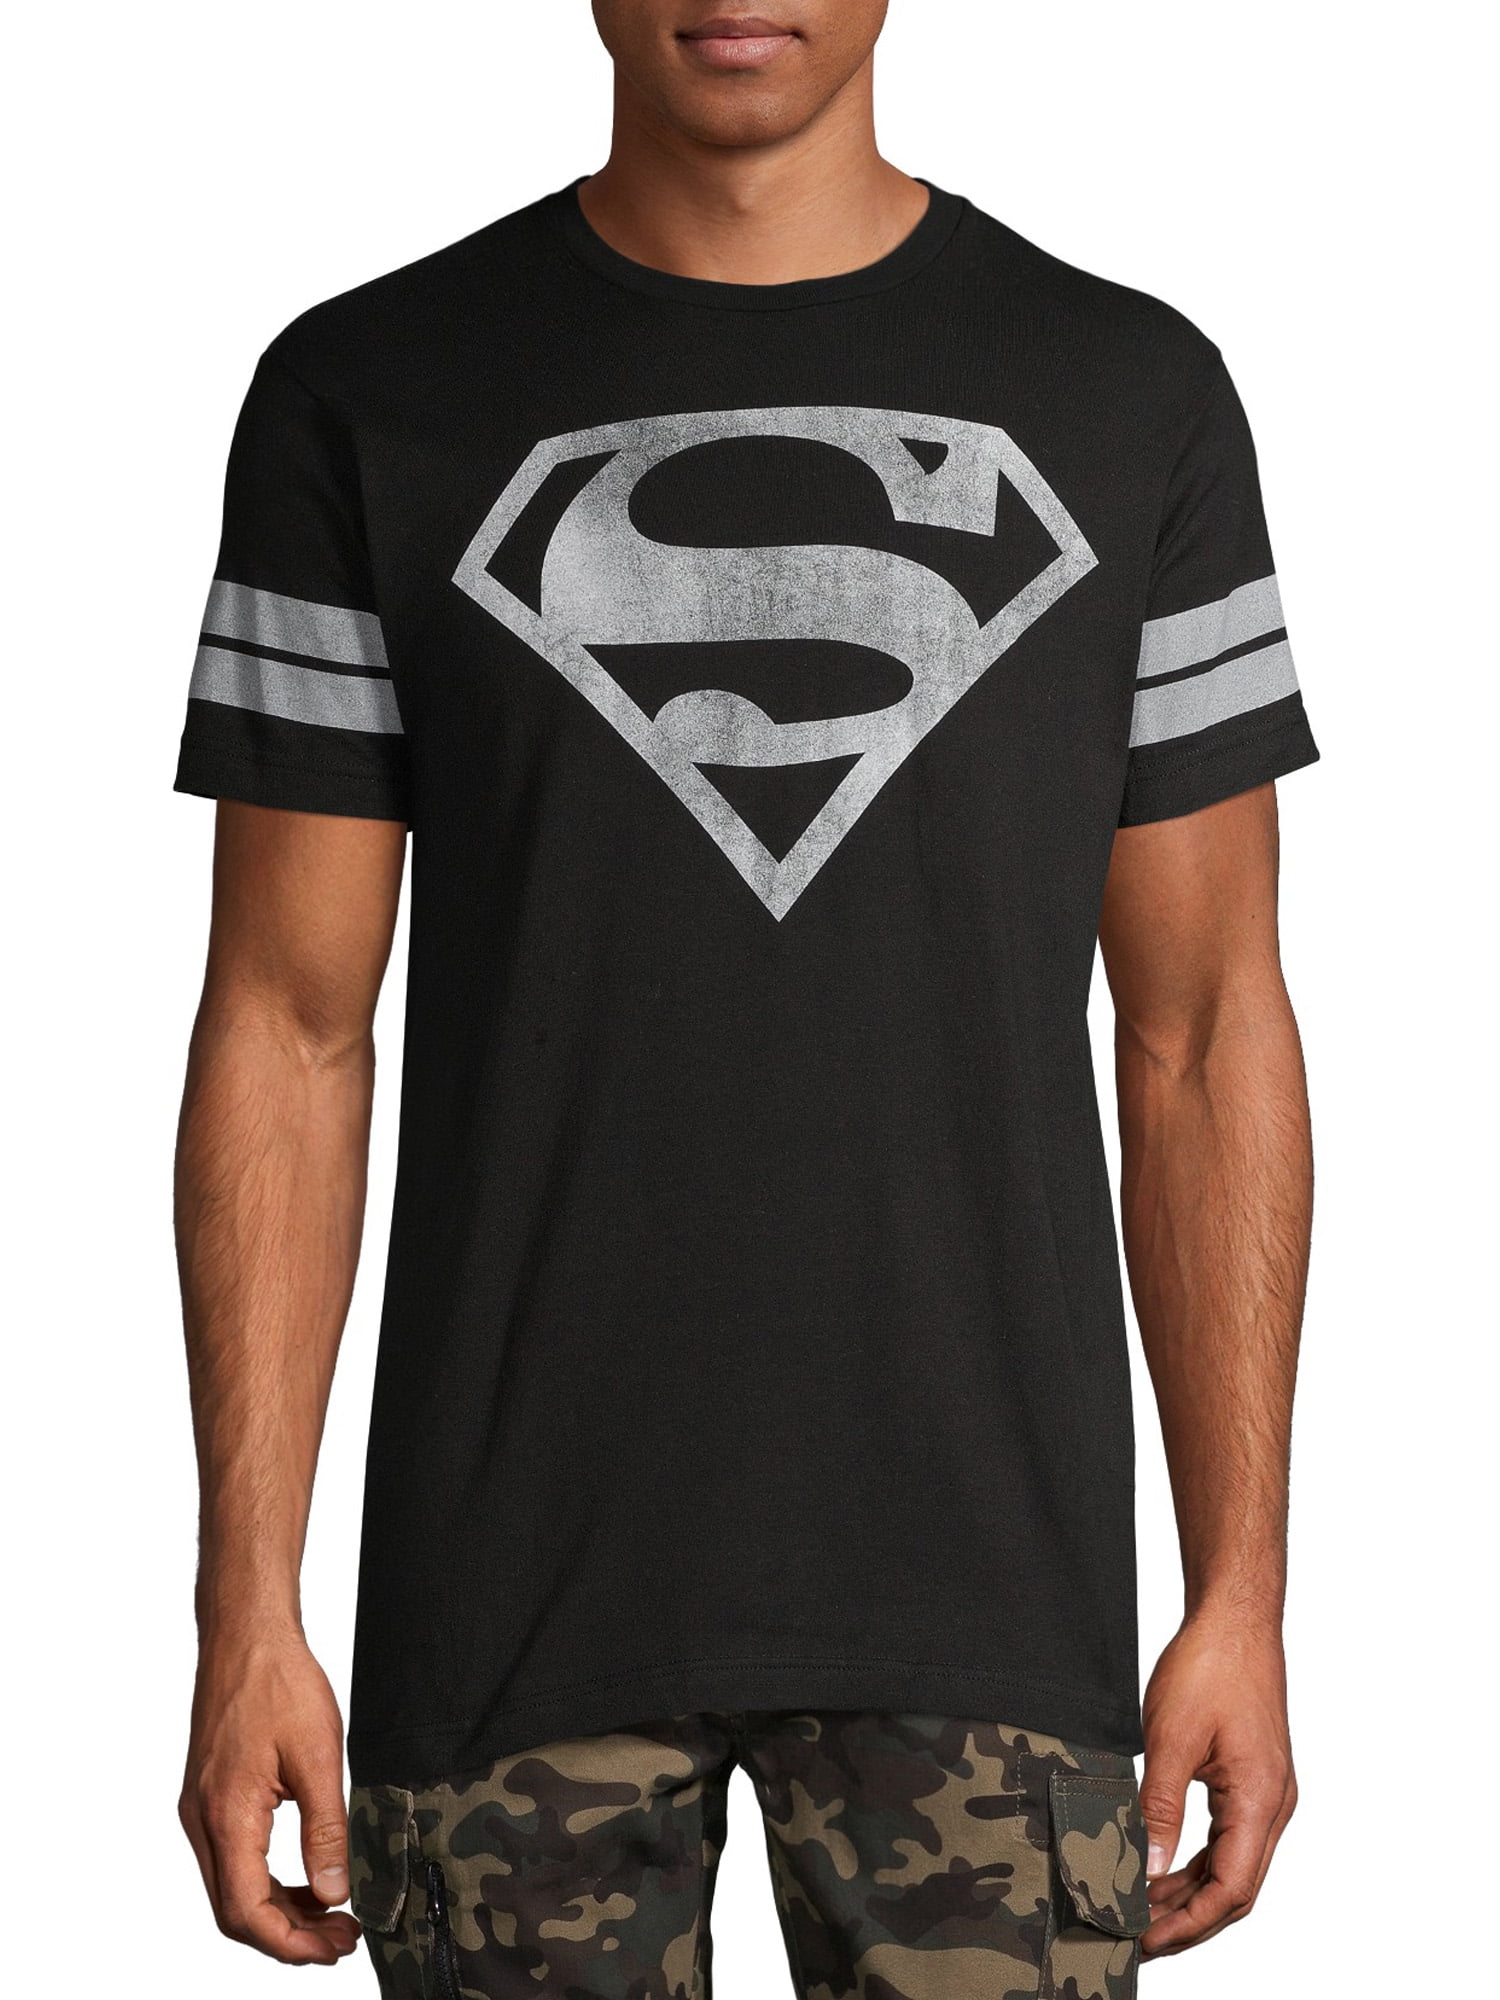 2XL Superman Mens Splatter Logo Shirt New S 